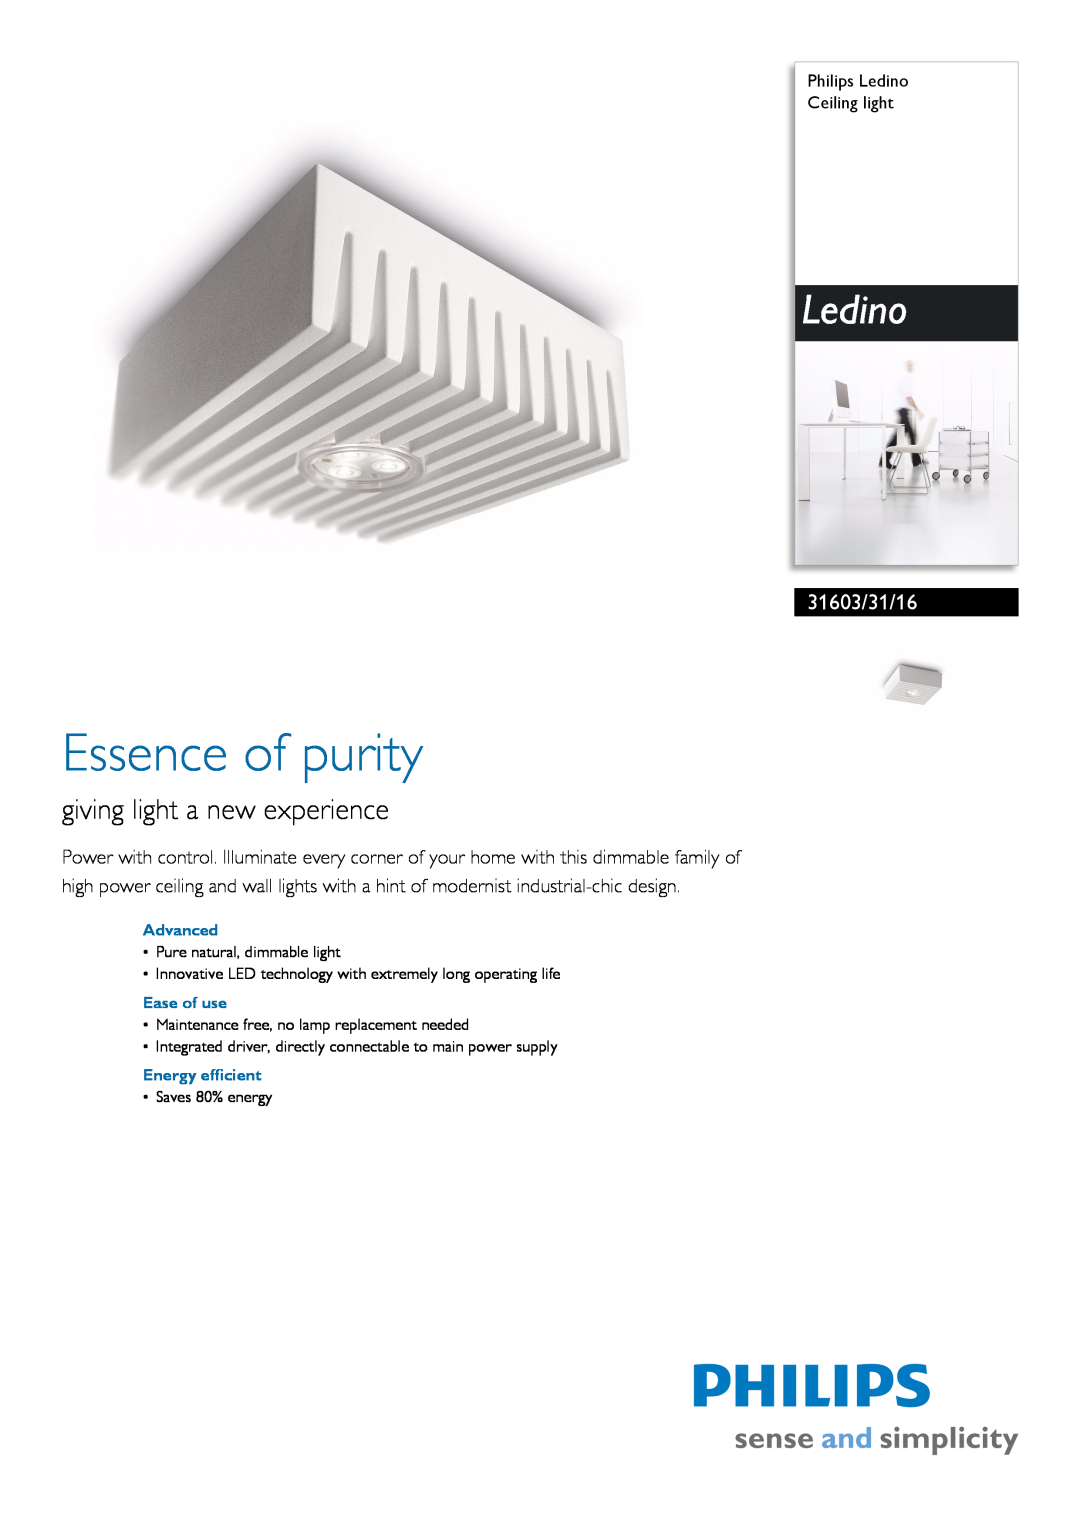 Philips 31603/31/16 manual Philips Ledino Ceiling light, Advanced, Ease of use, Energy efficient, Essence of purity 